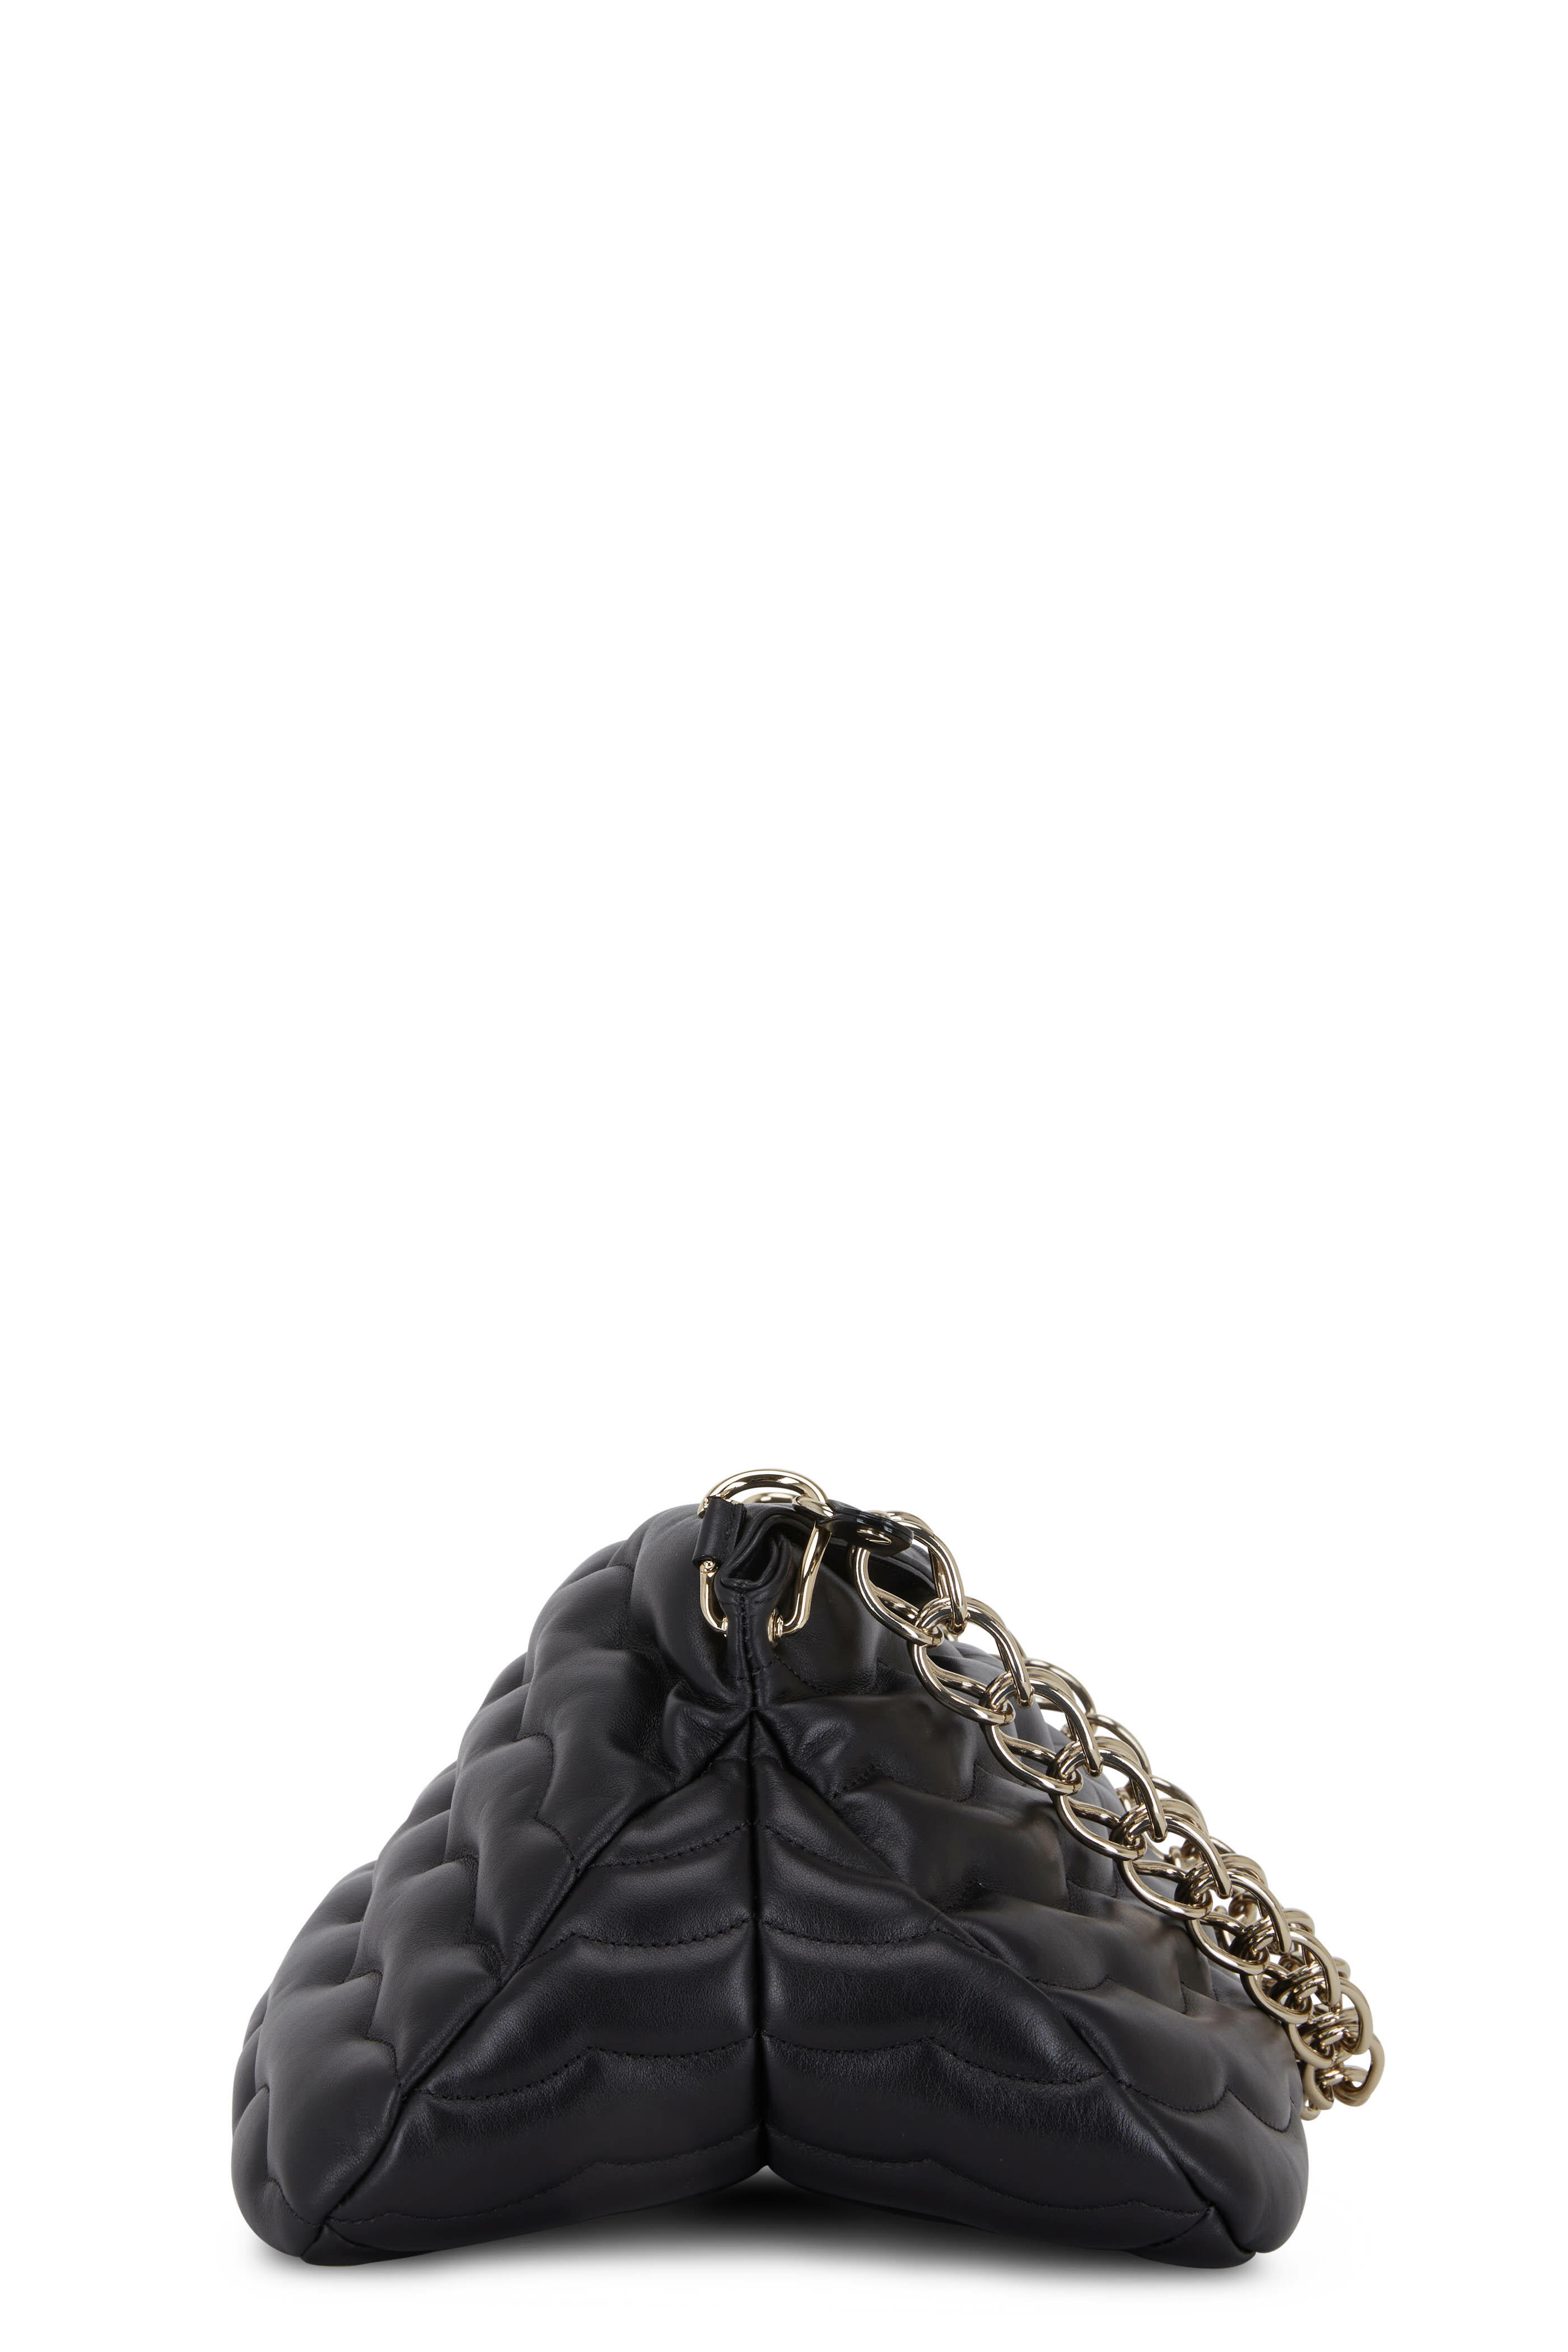 Chloé - Juana Black Medium Quilted Leather Chain Bag